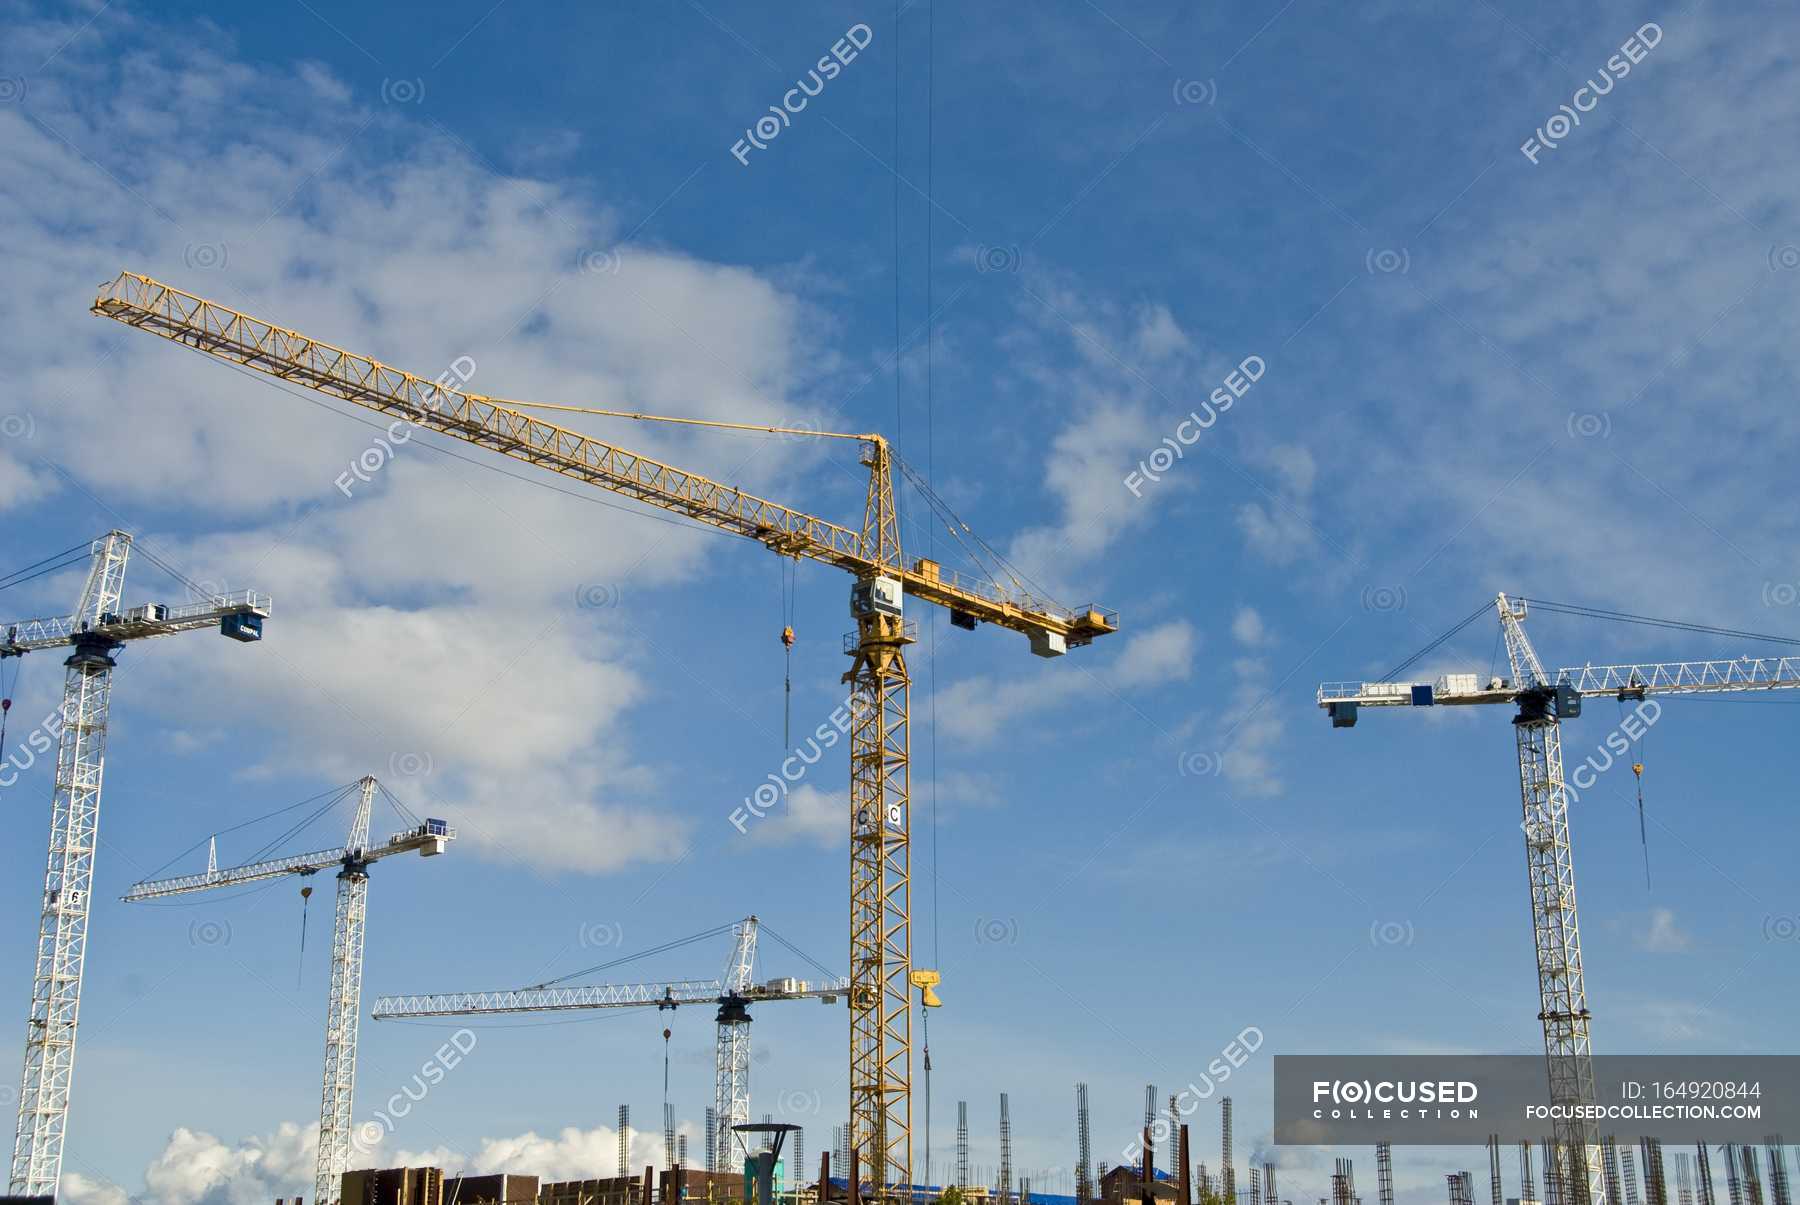 Cranes working during daytime — Stock Photo | #164920844